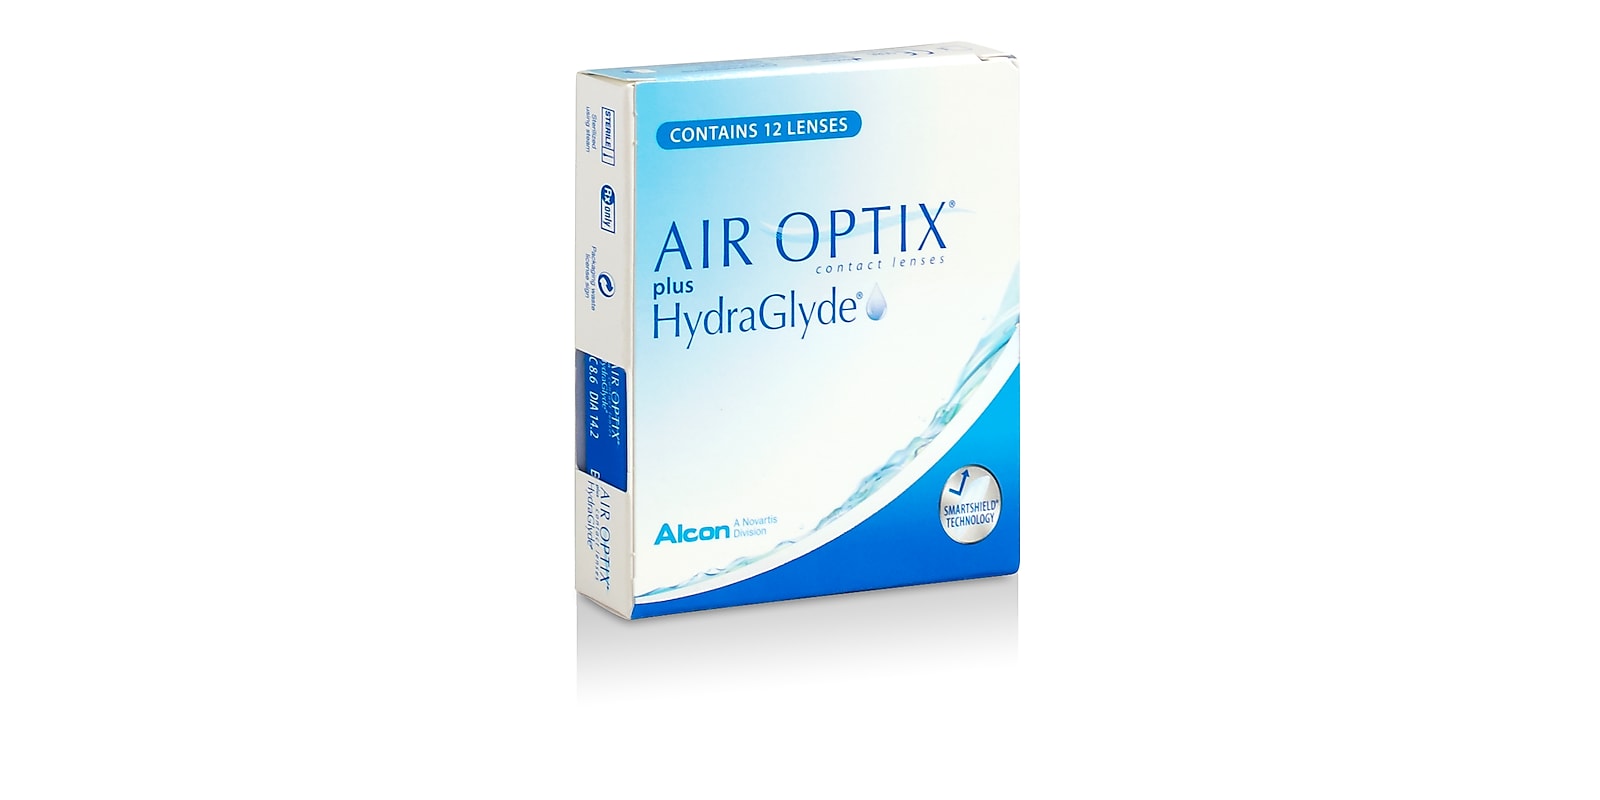 Air Optix® plus HydraGlyde®, 12 pack contact lenses